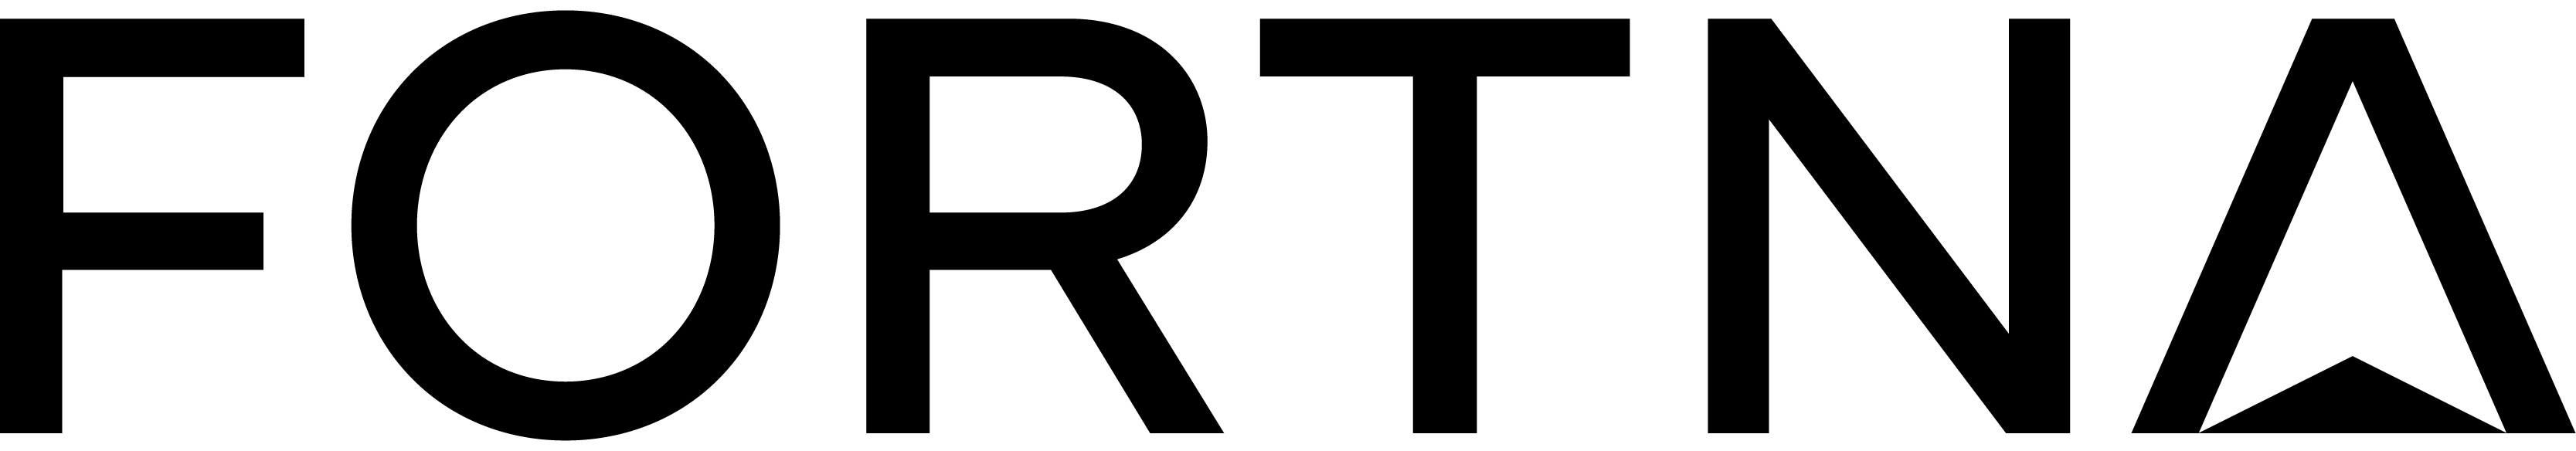 FORTNA logo